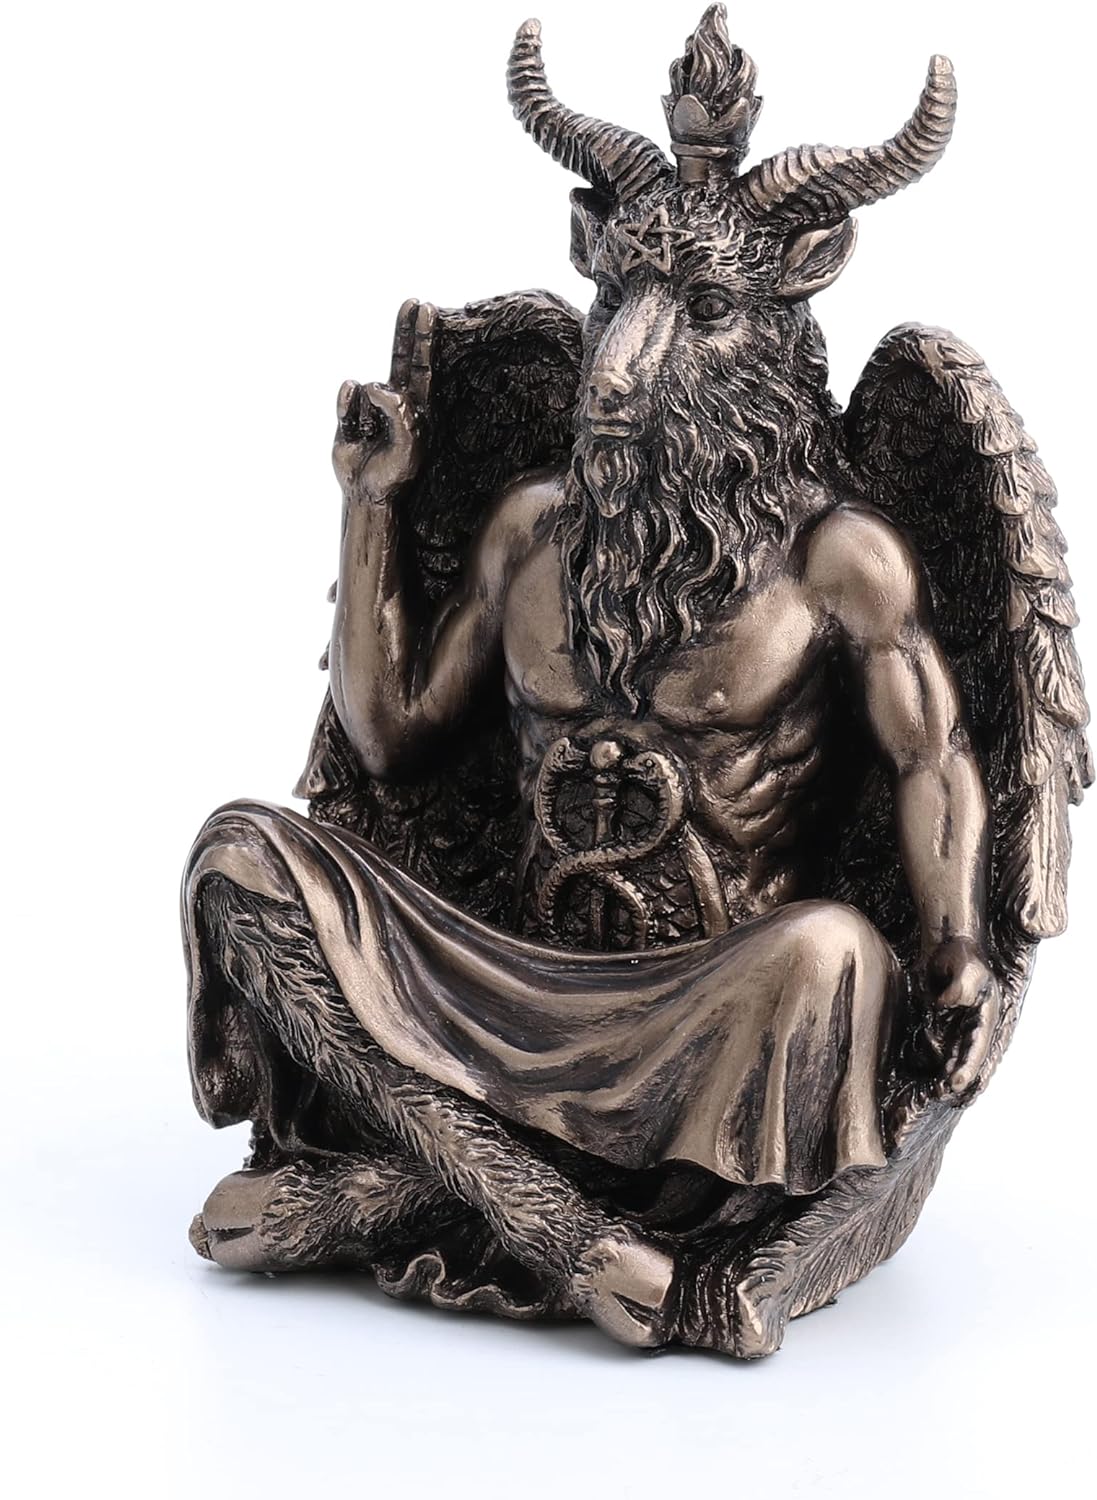 Baphomet Sitting Meditation Pose Statue